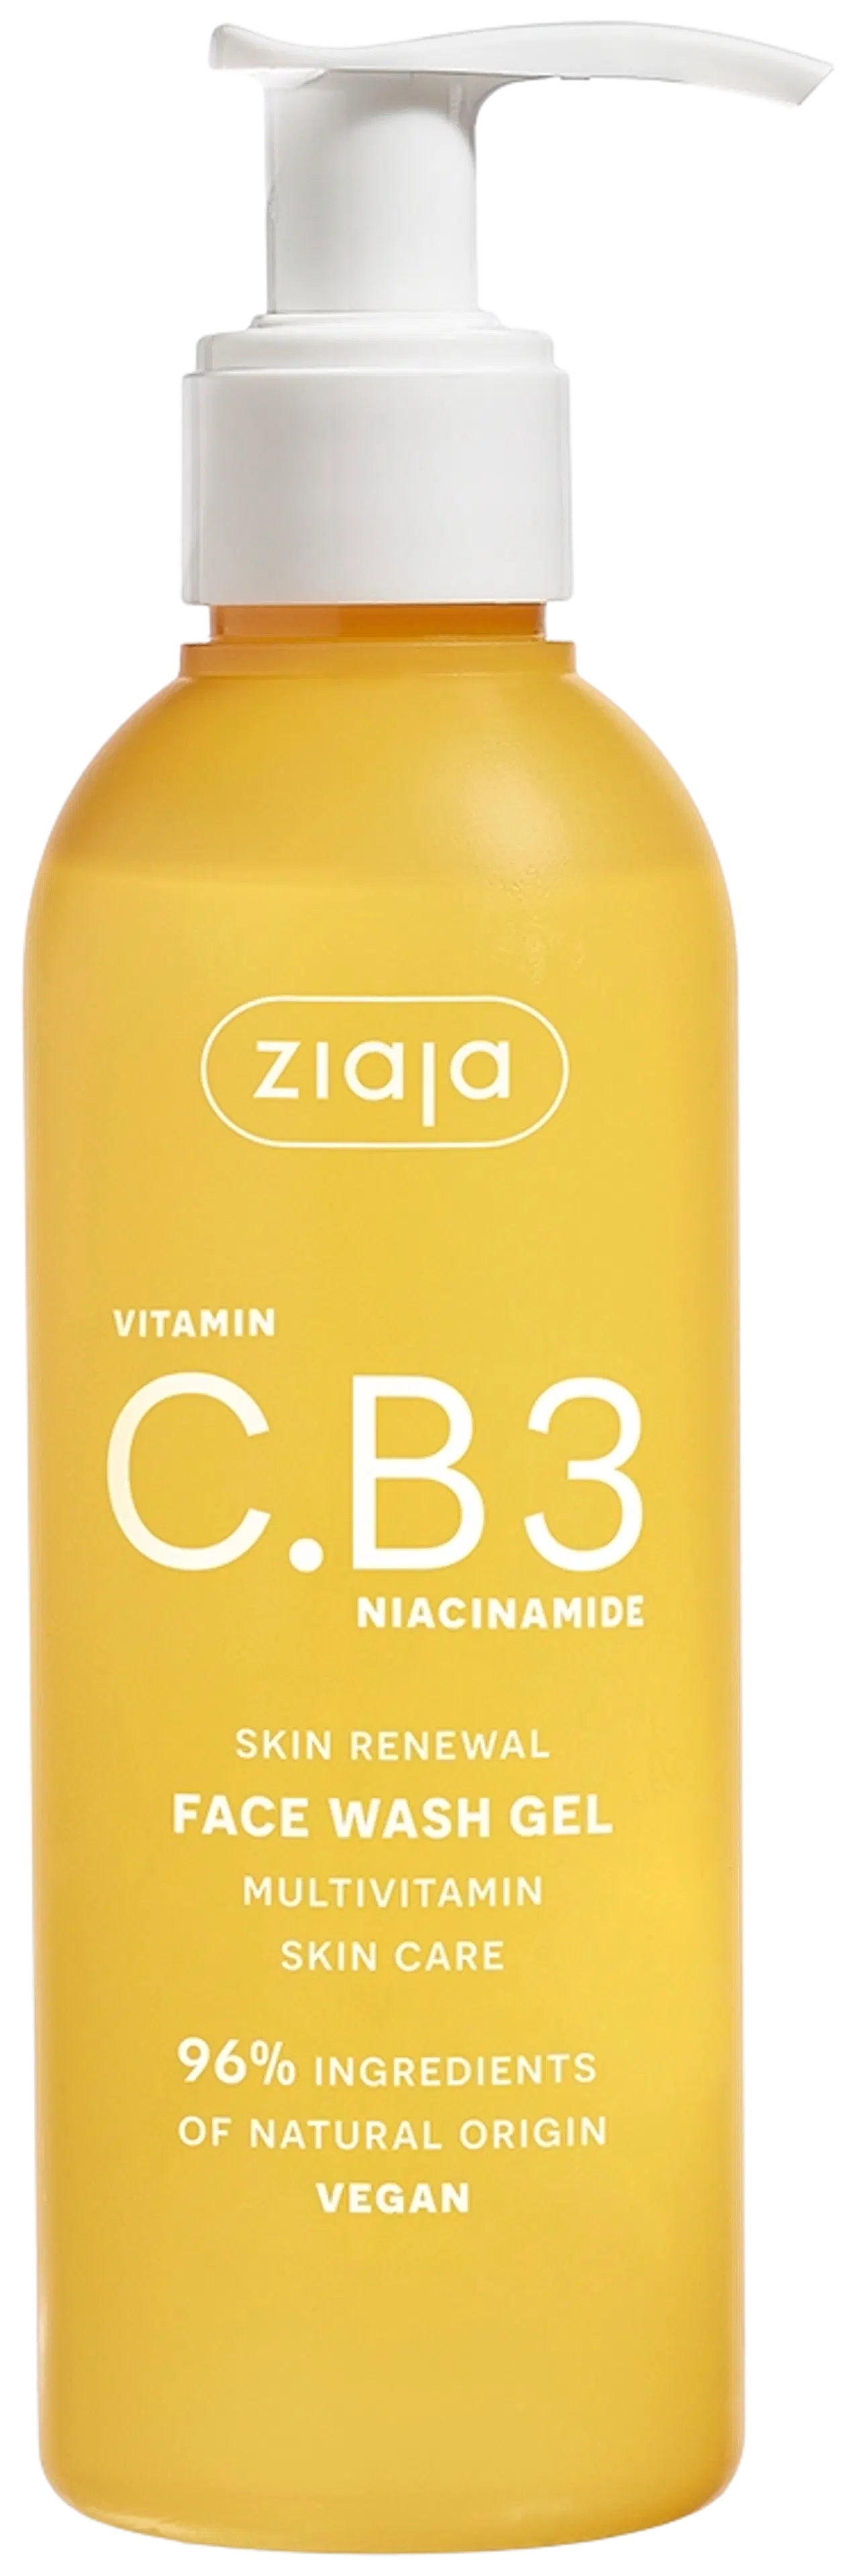 Ziaja C.B3 vitamiini puhdistusgeeli 190 ml